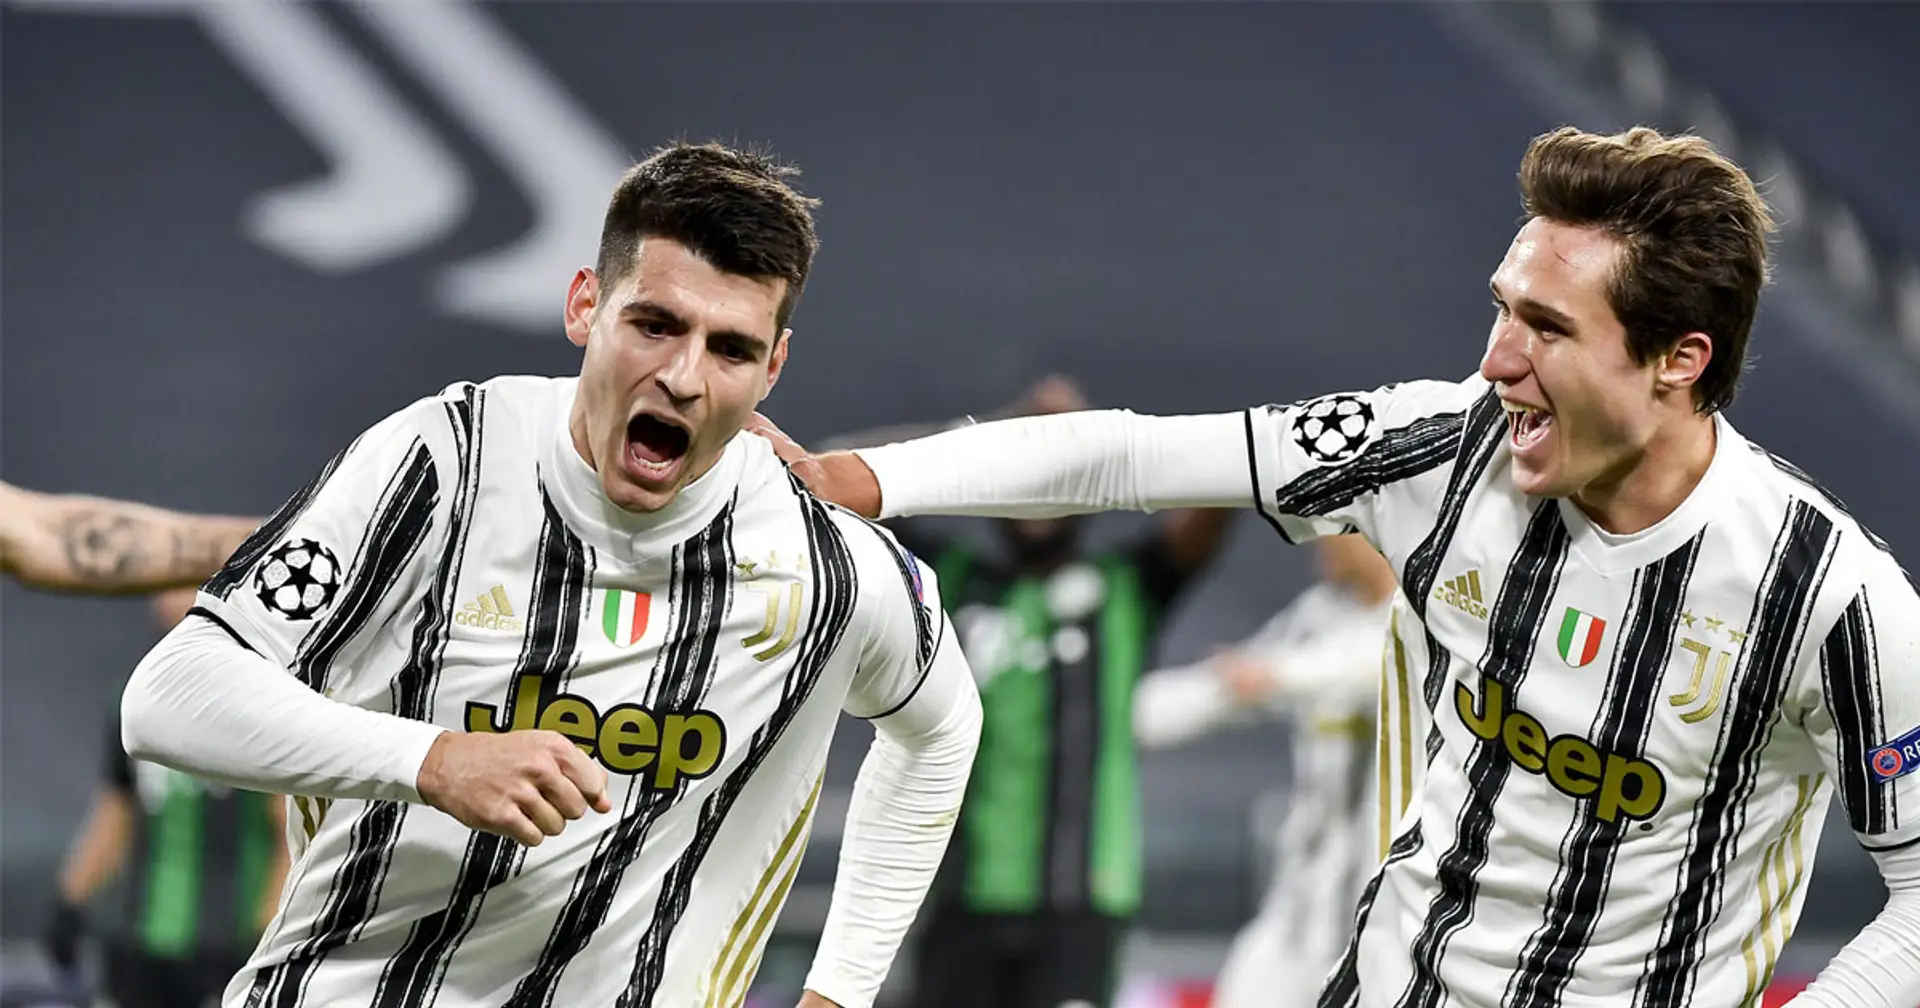 Pagelle Juventus vs. Ferencvàros 2-1 e impressioni a caldo